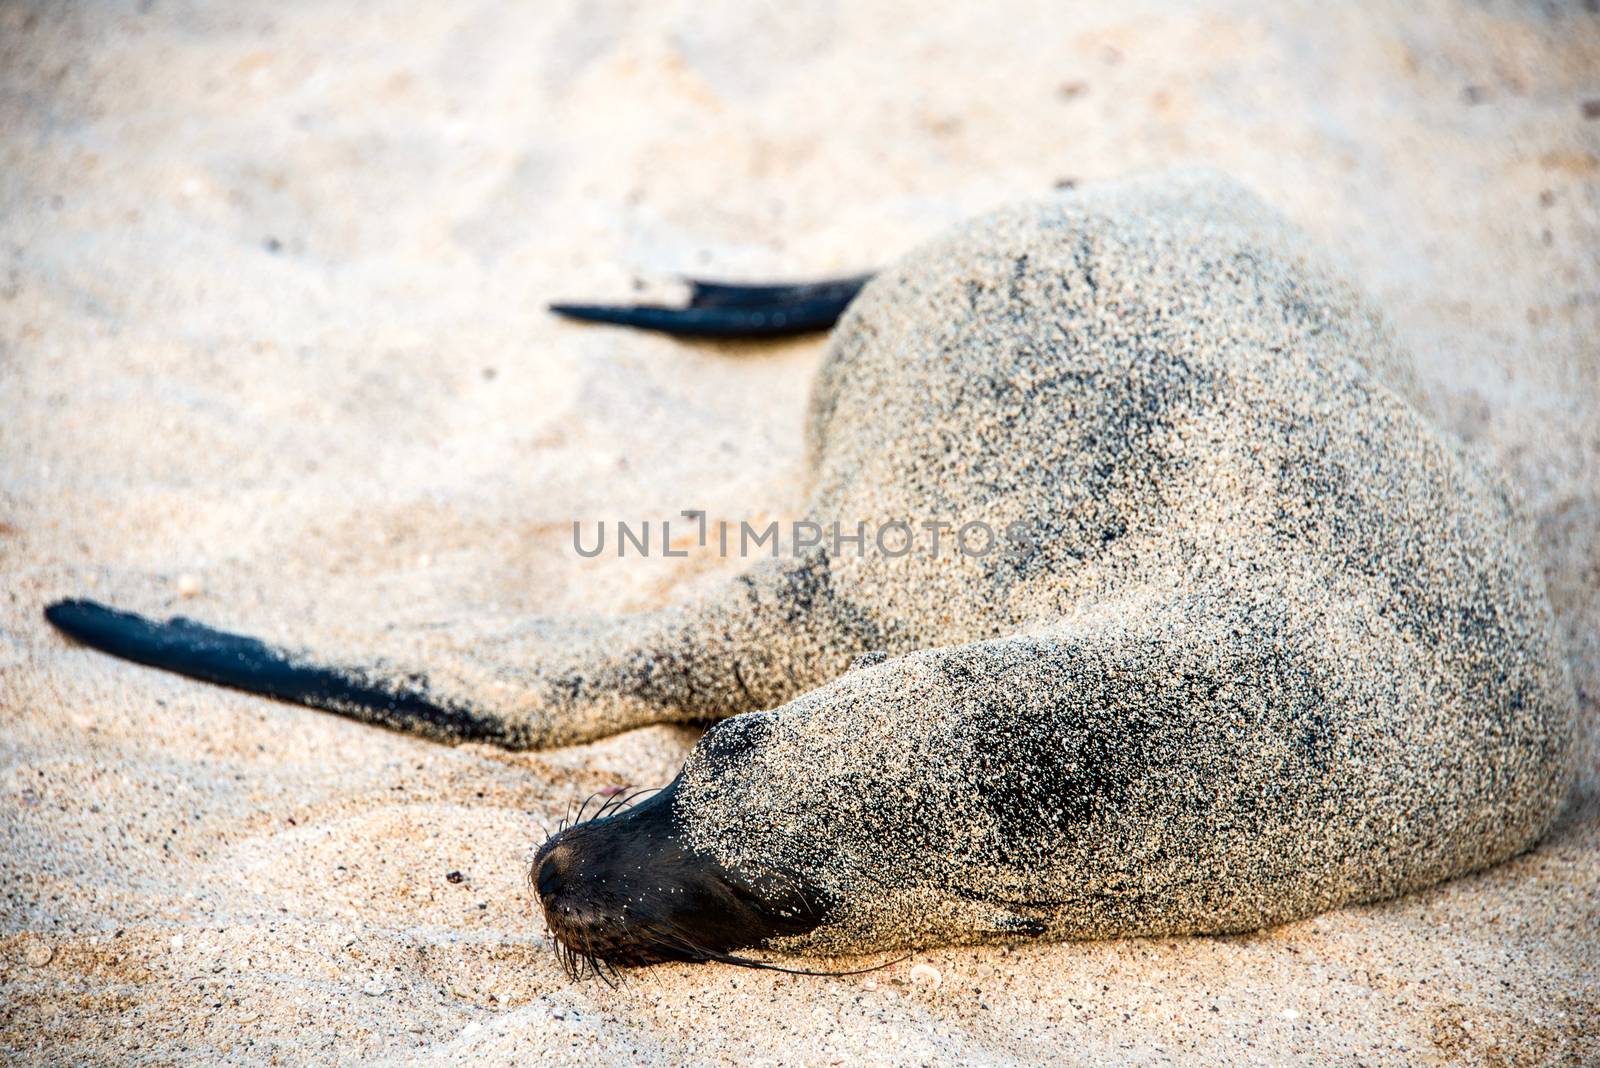 Sea lion resting under the sun, Puerto Baquerizo Moreno, Galapagos